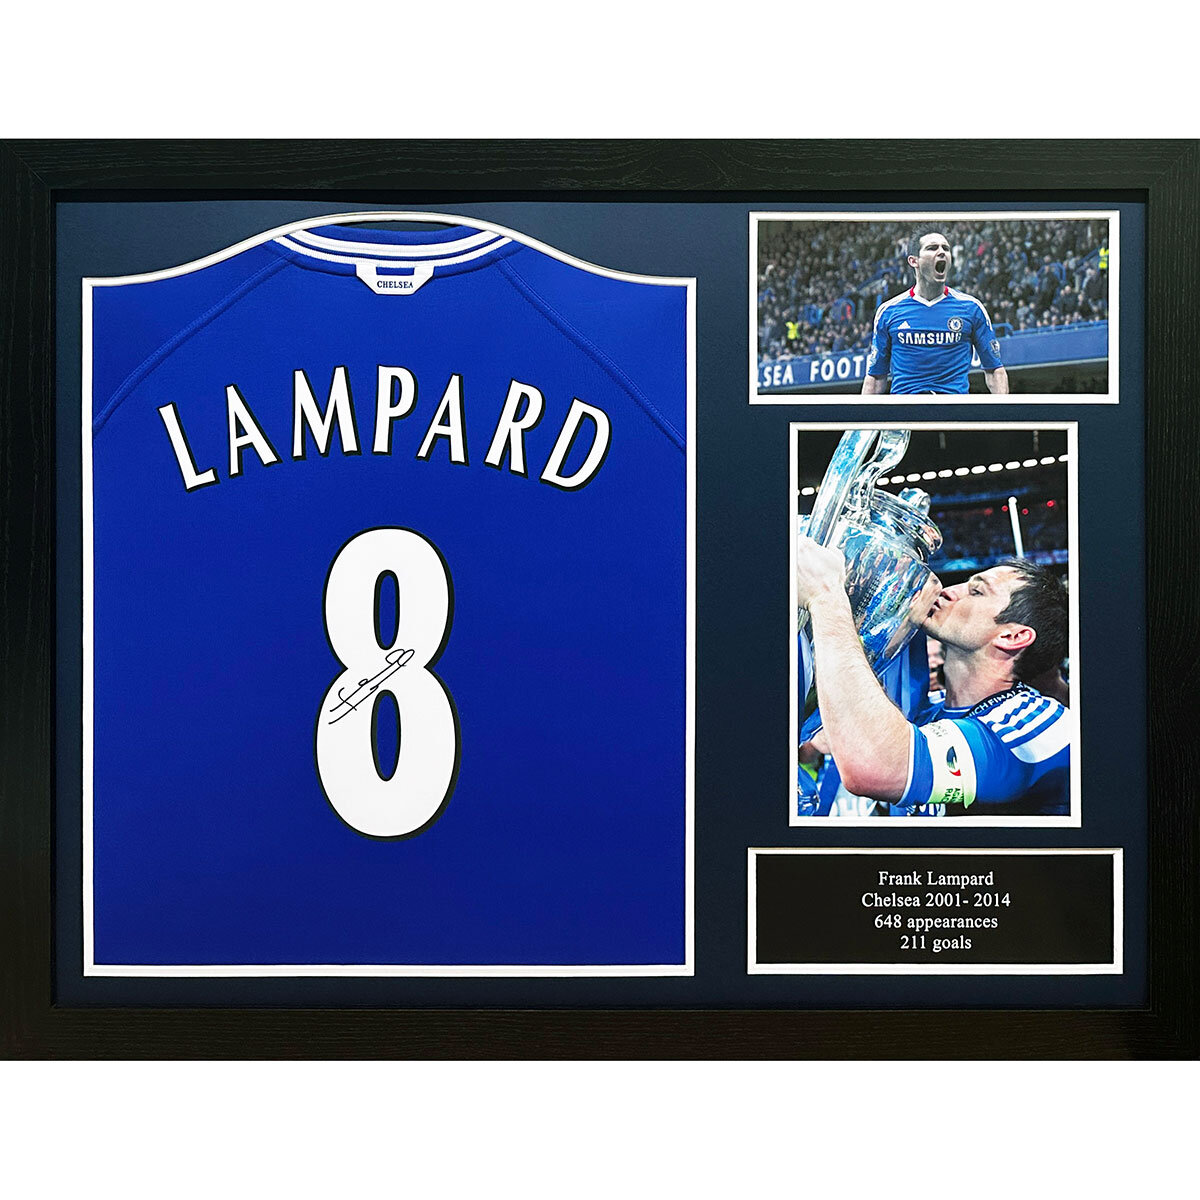 Frank Lampard signed shirt